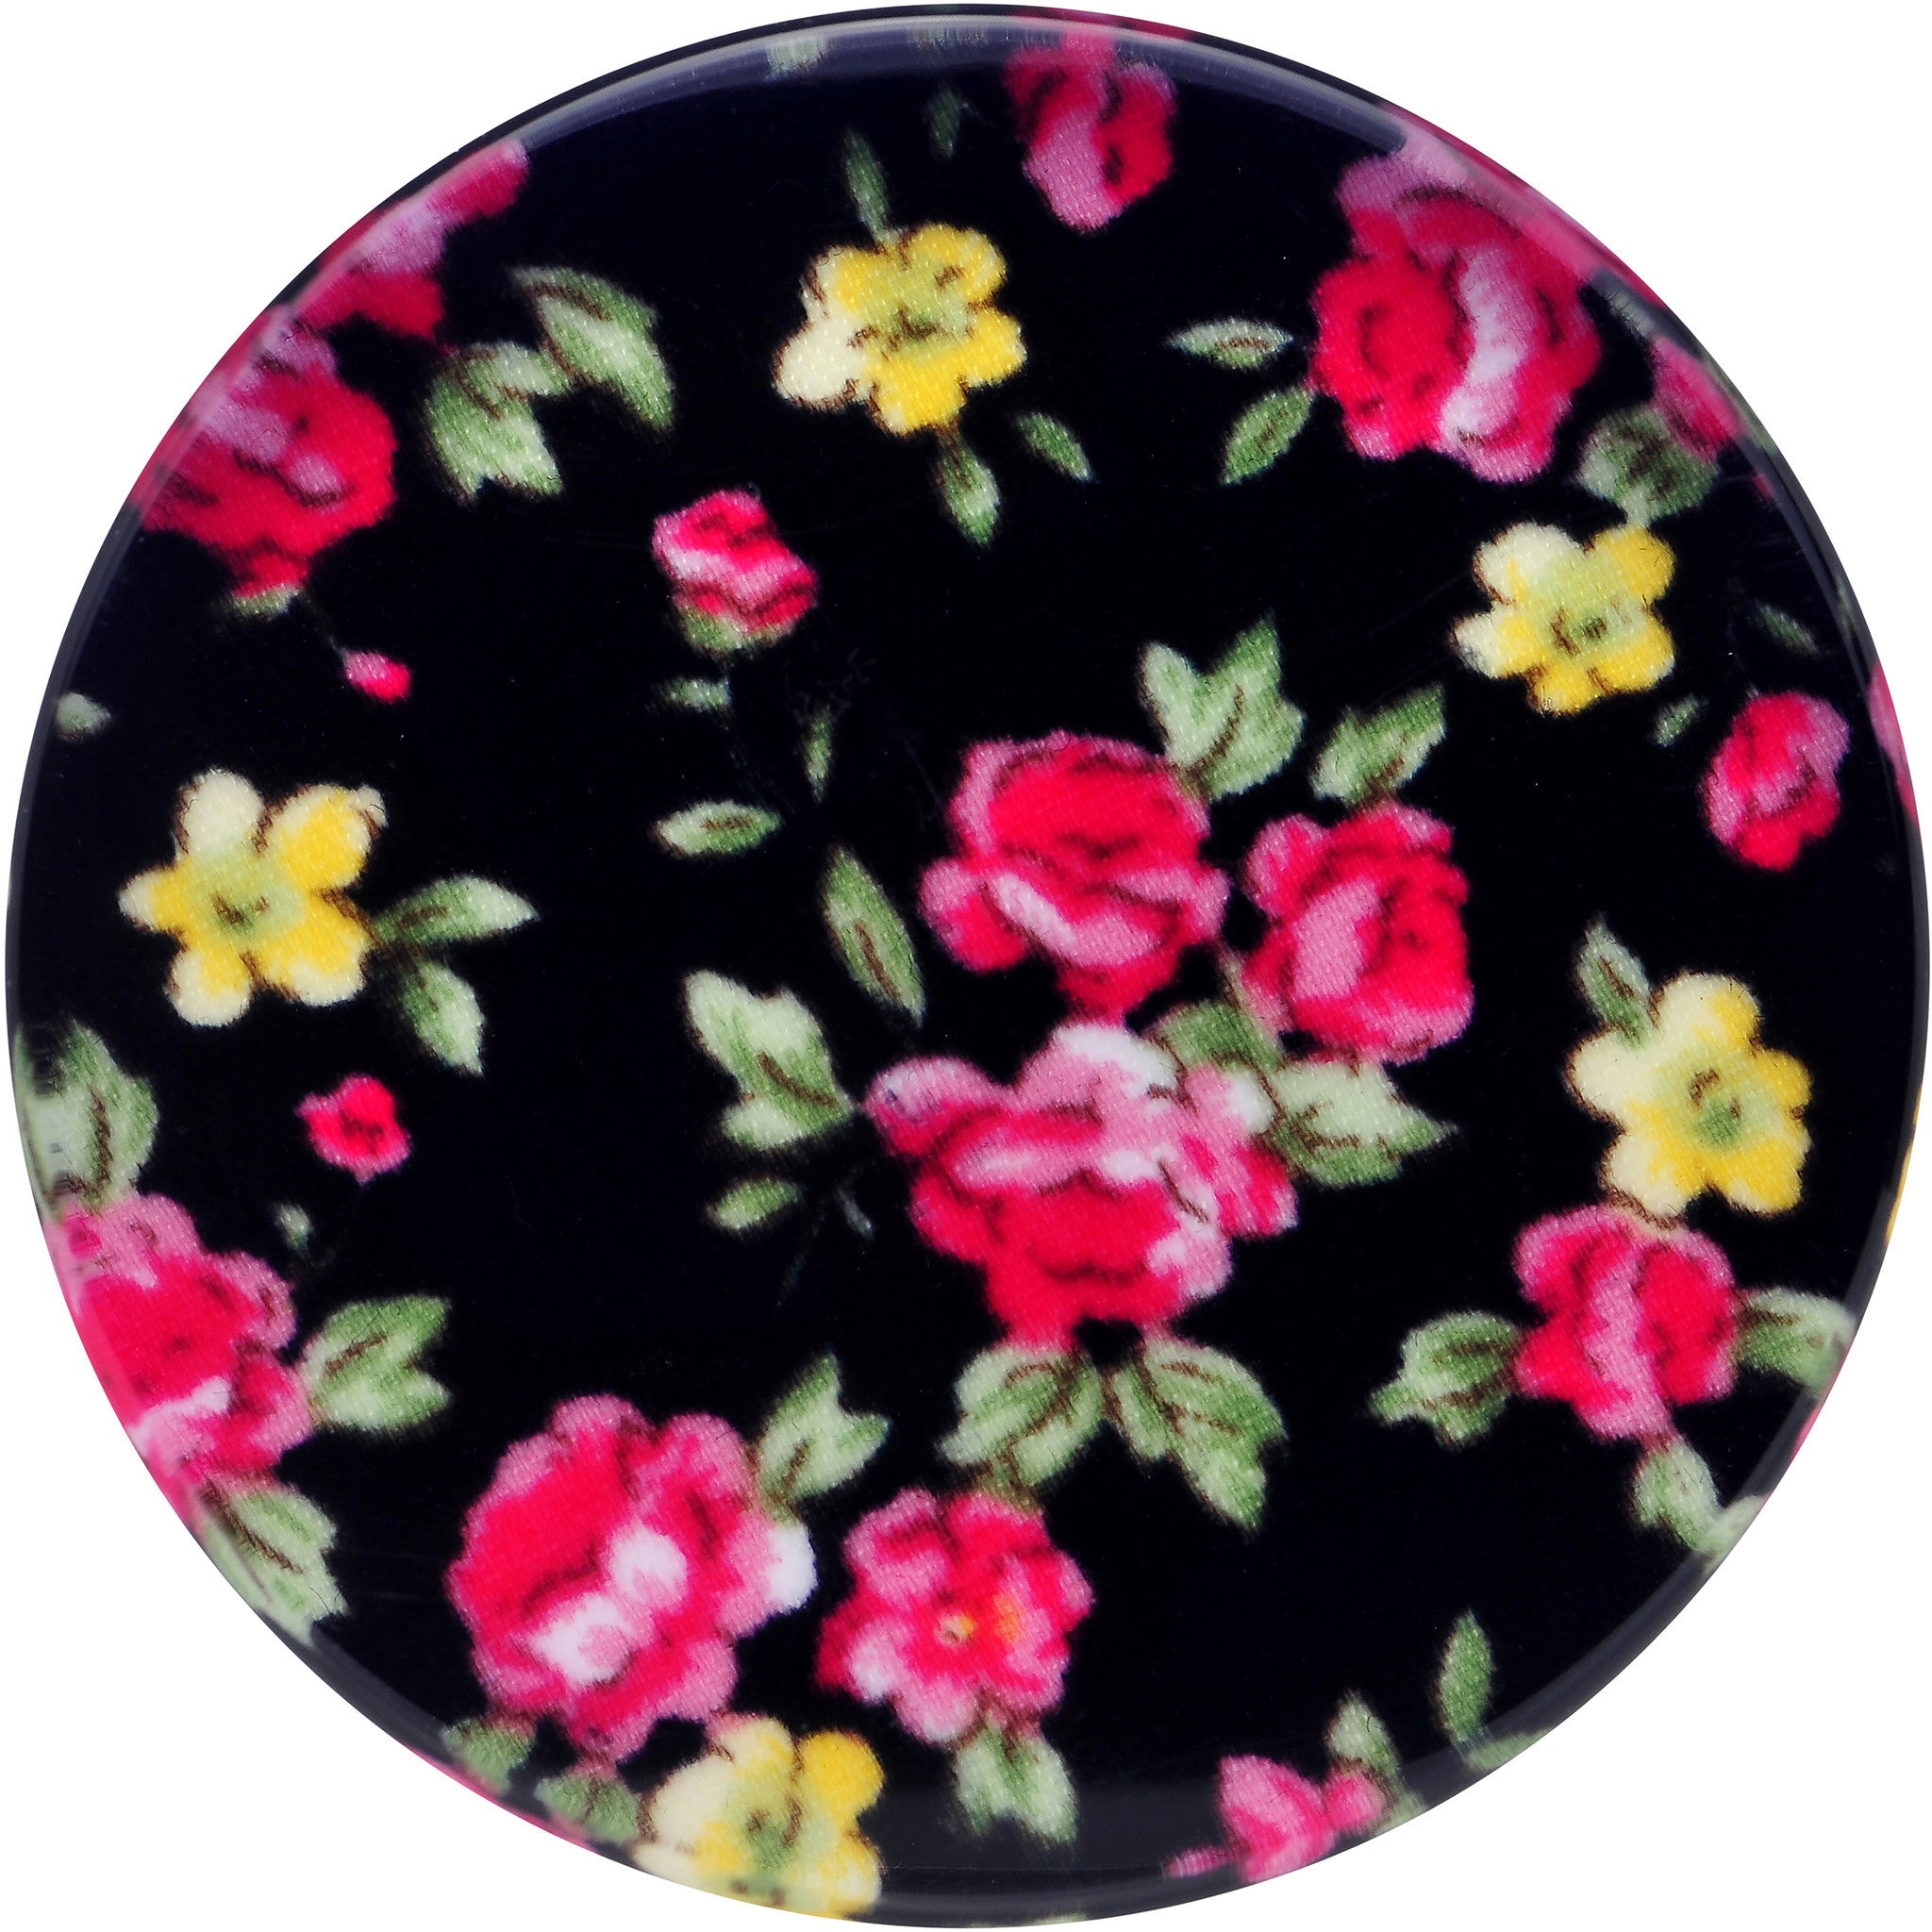 50mm Acrylic Black Multicolored Old Fashioned Flowers Saddle Plug